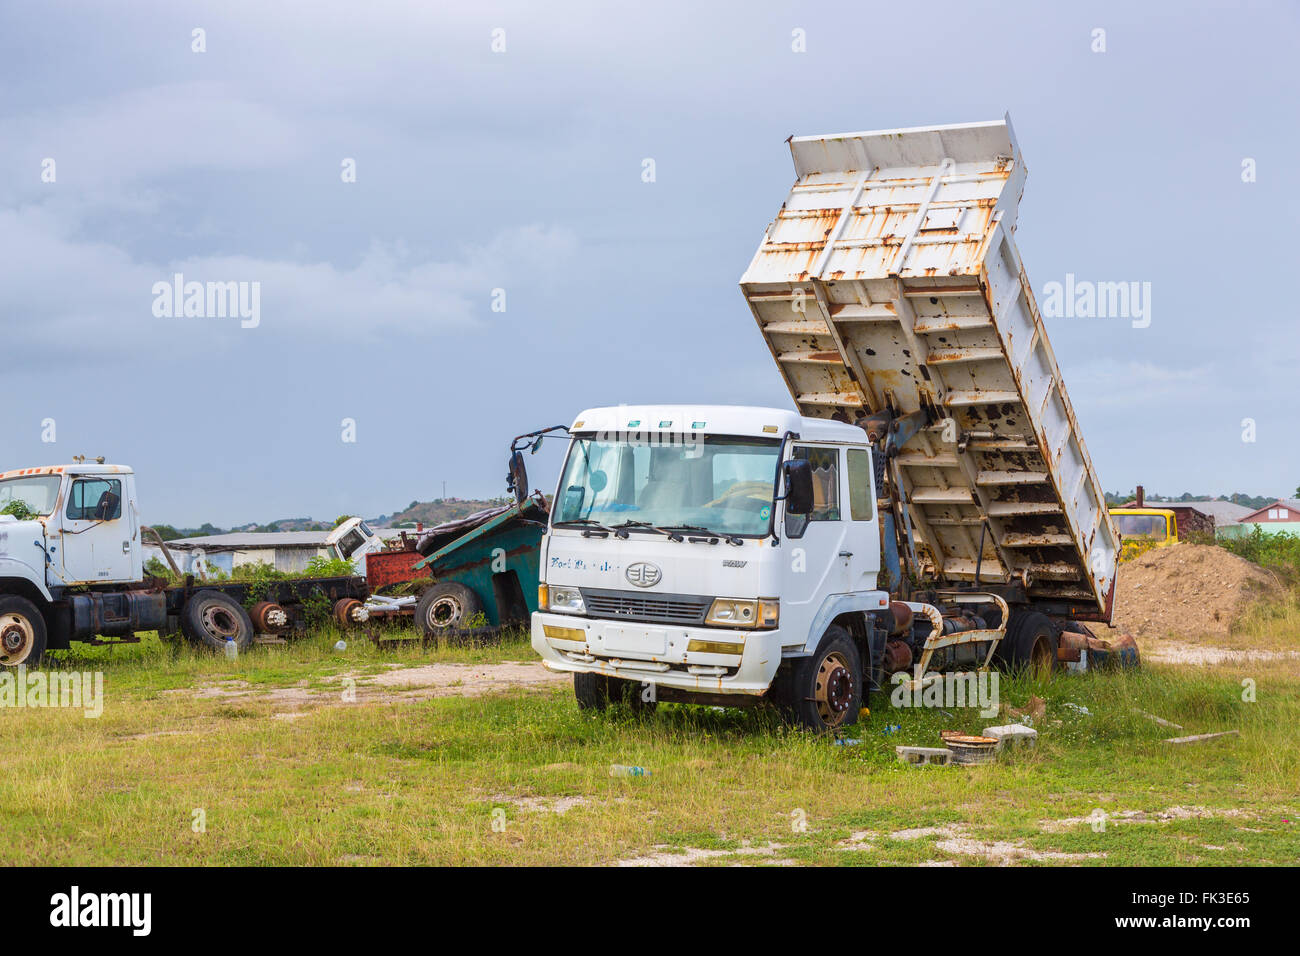 Arrugginimento FAW Automotive ribaltabile, Ogg Spencer scrapyard autotrasporti, Liberta, sud Antigua Antigua e Barbuda, Antille Foto Stock